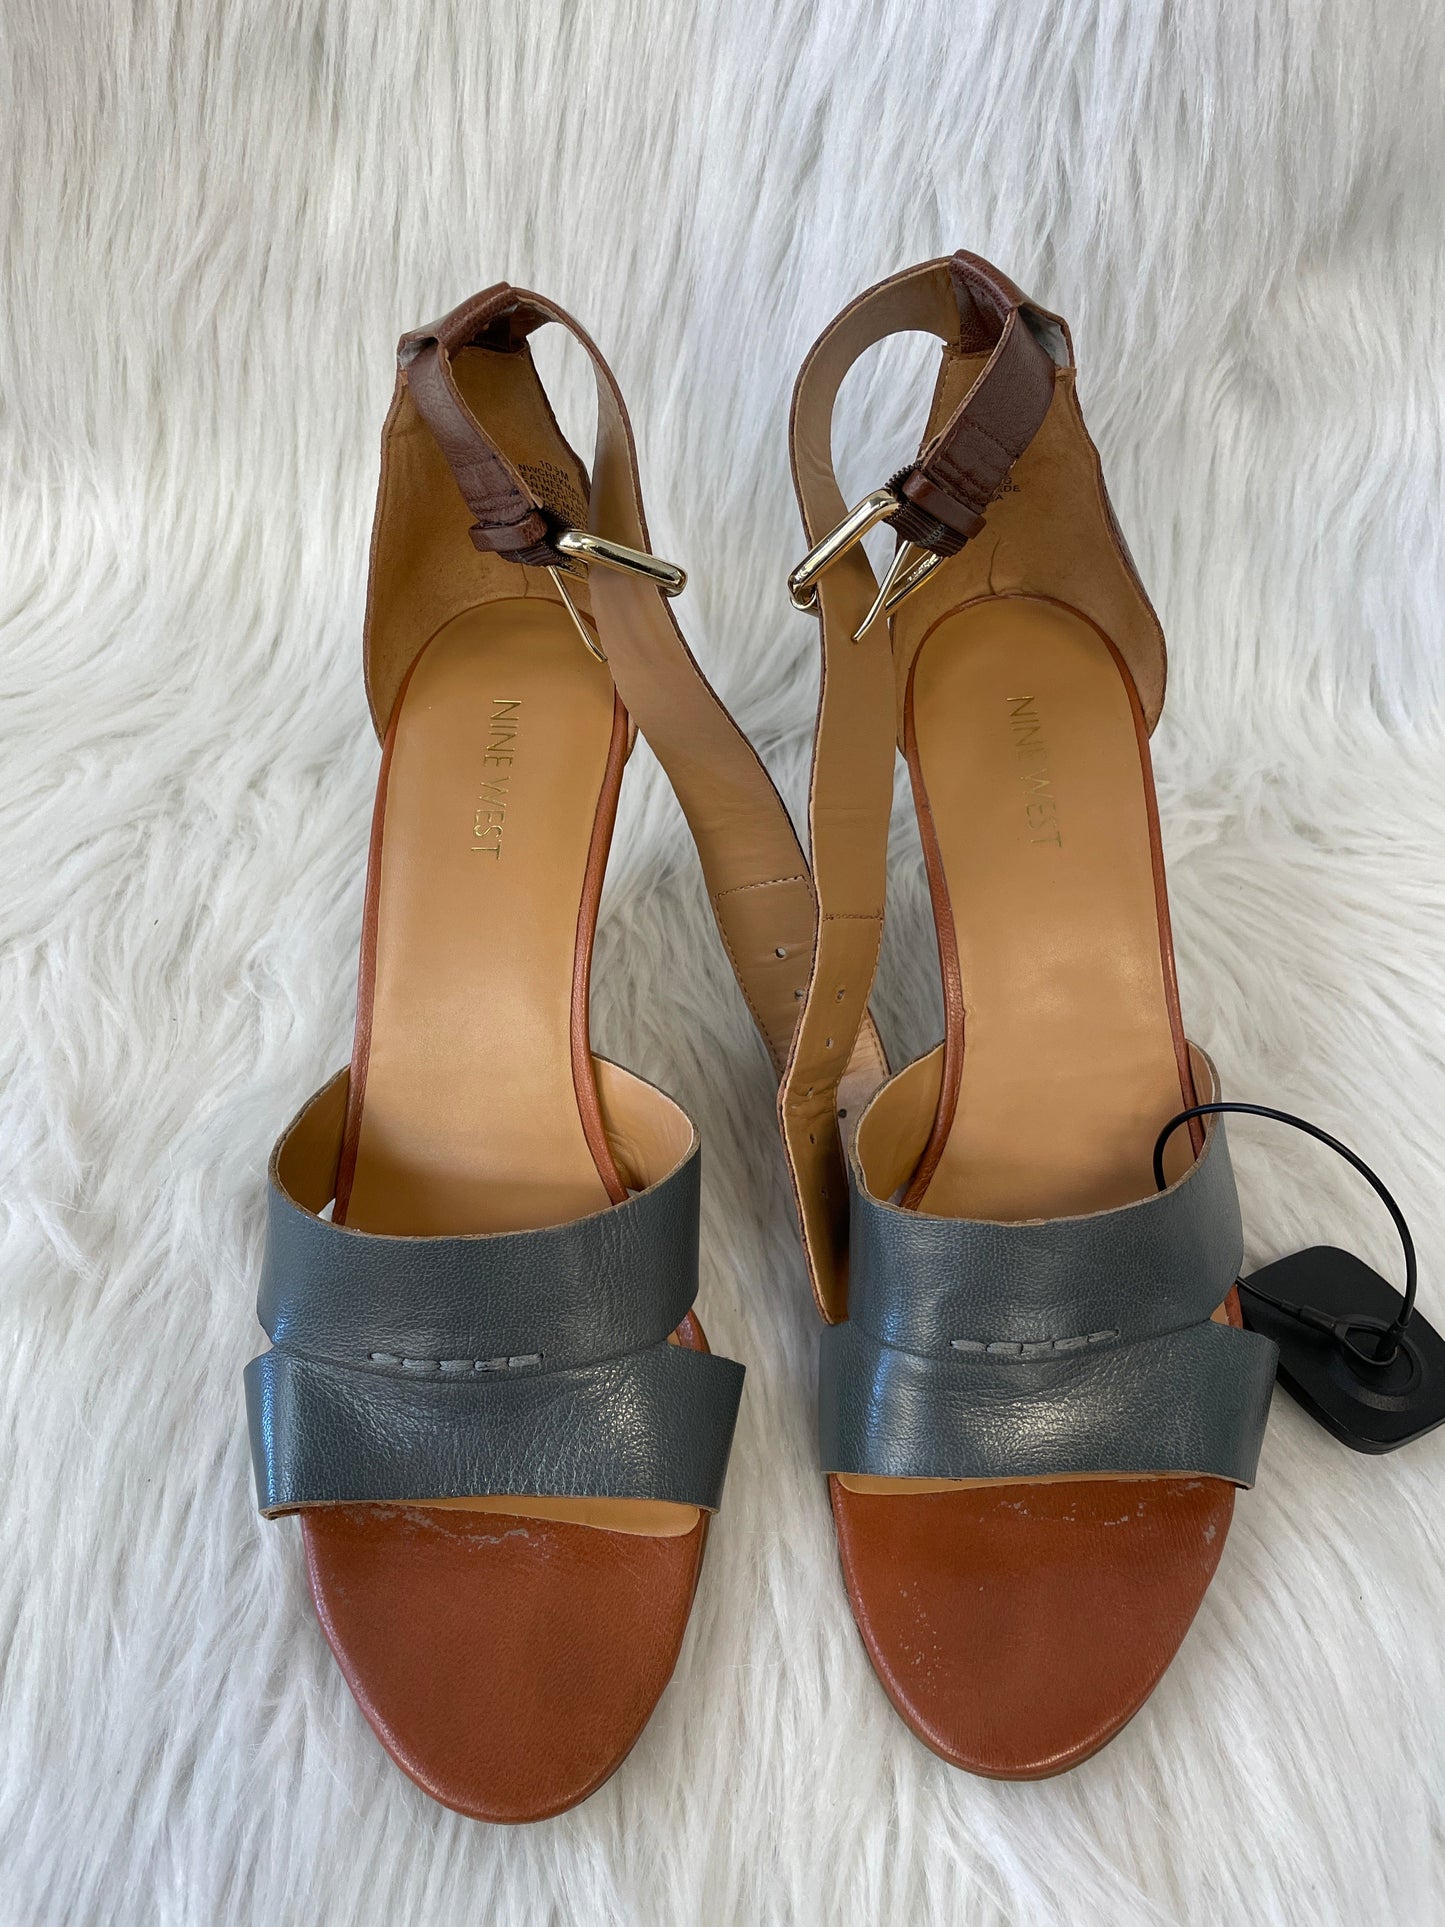 Brown Sandals Heels Wedge Nine West, Size 10.5